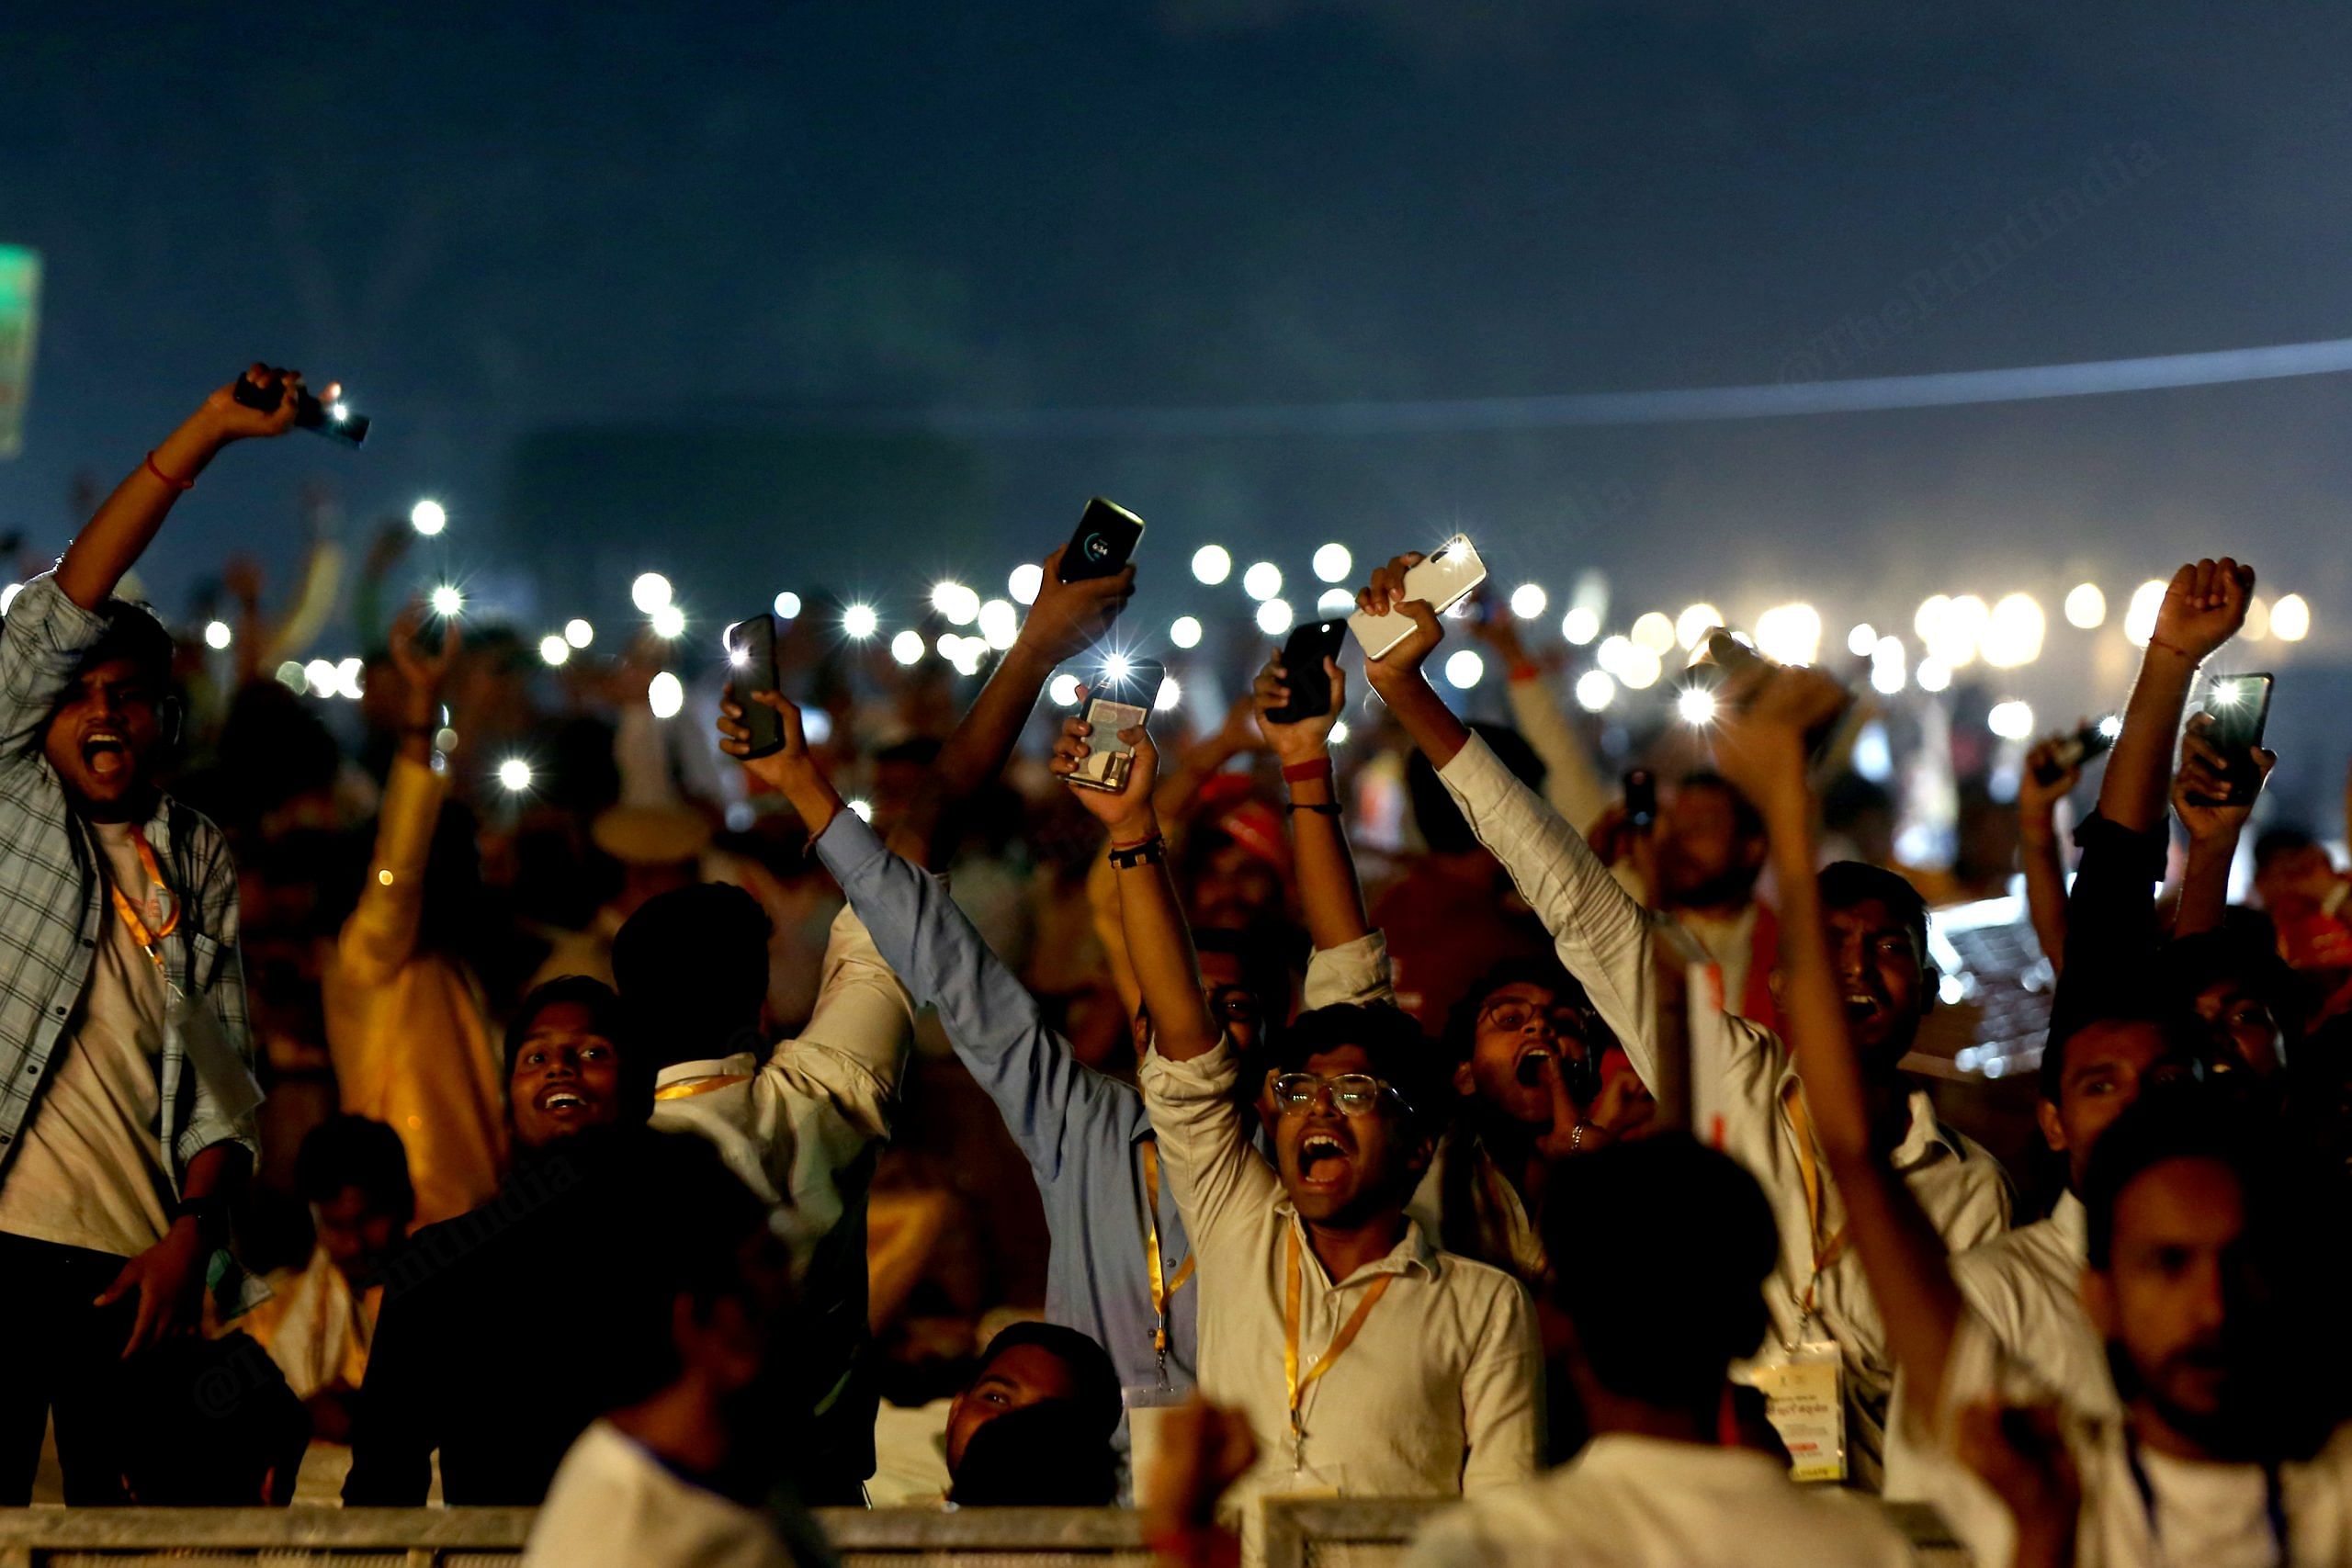 The crowd wave cellphone flashlights during the PM's speech | Photo: Suraj Singh Bisht | ThePrint